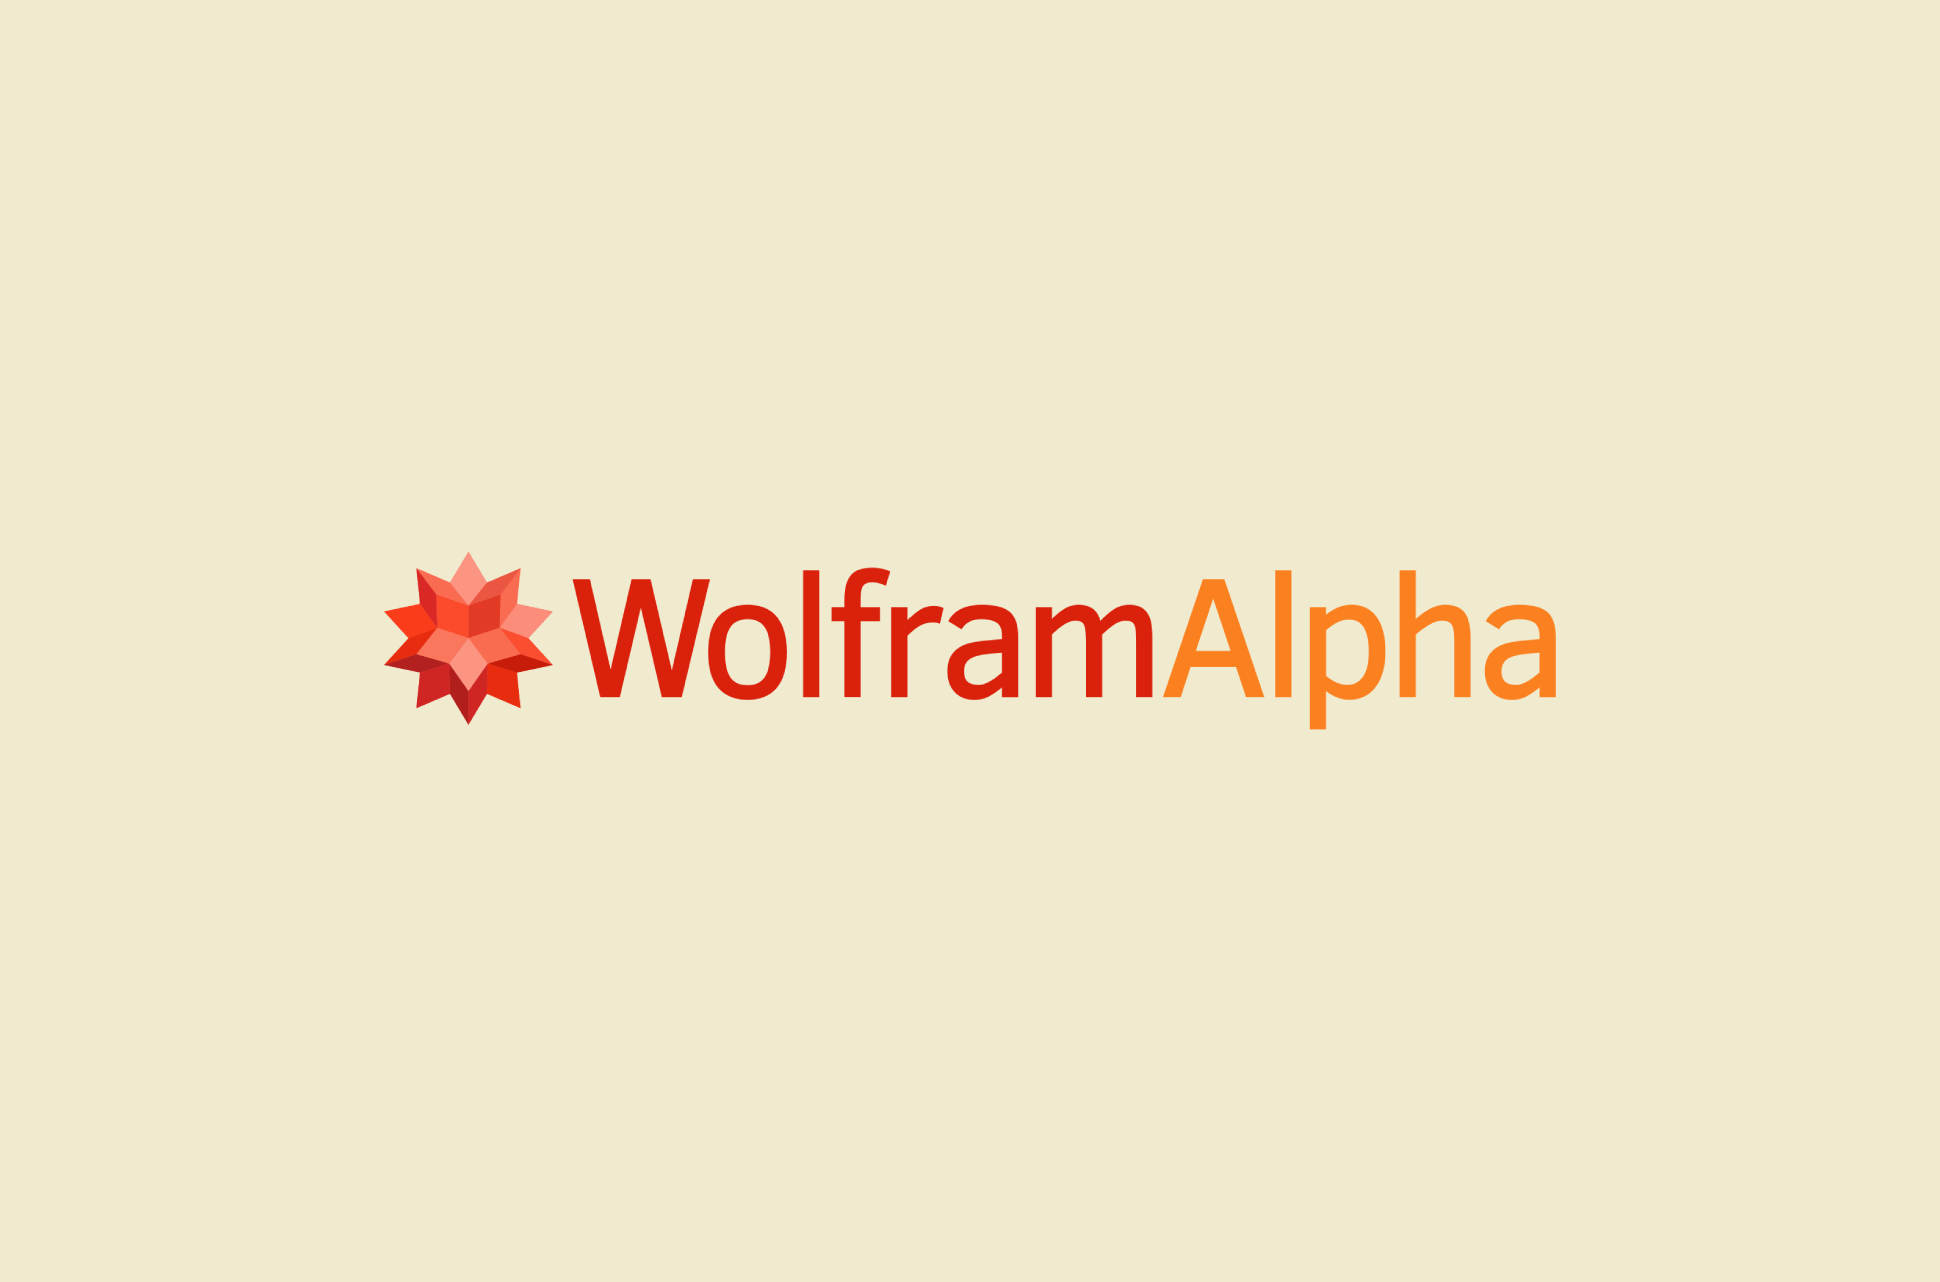 Wolfram Alpha logo.